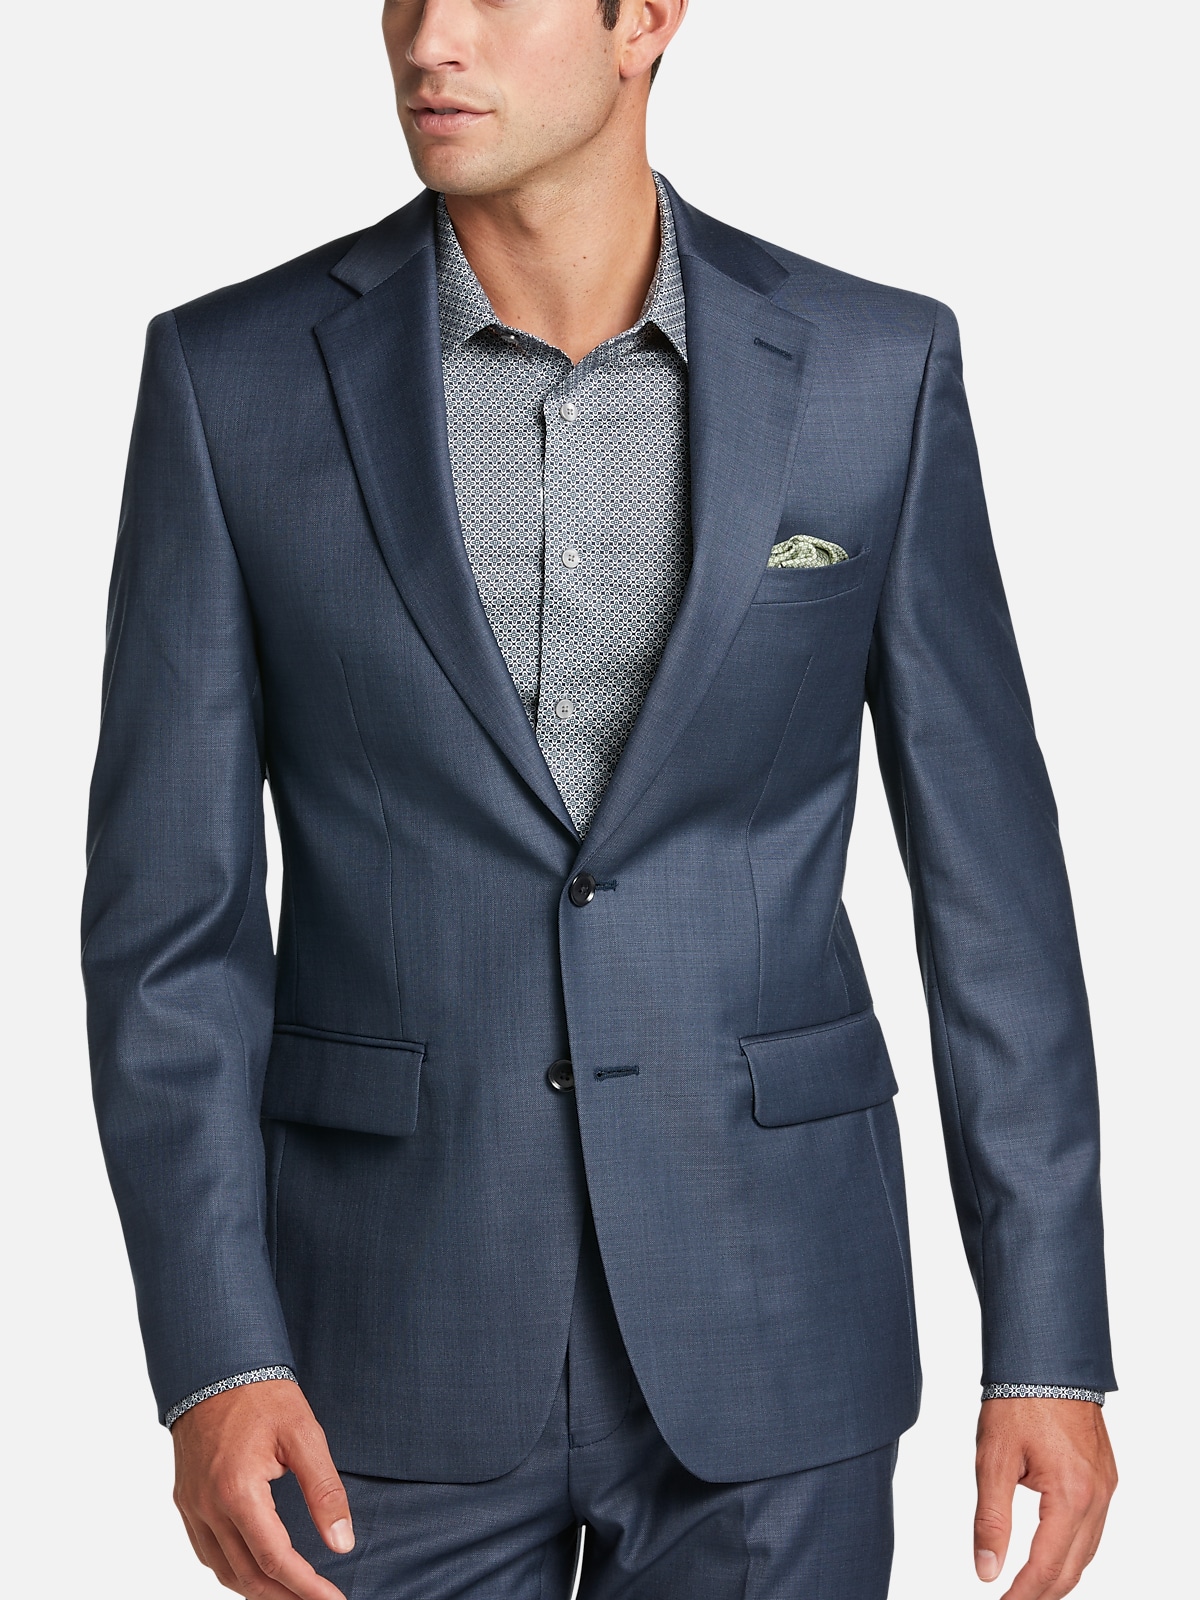 Calvin Klein Slim Fit Suit Separates Jacket | All Clearance $39.99| Men ...